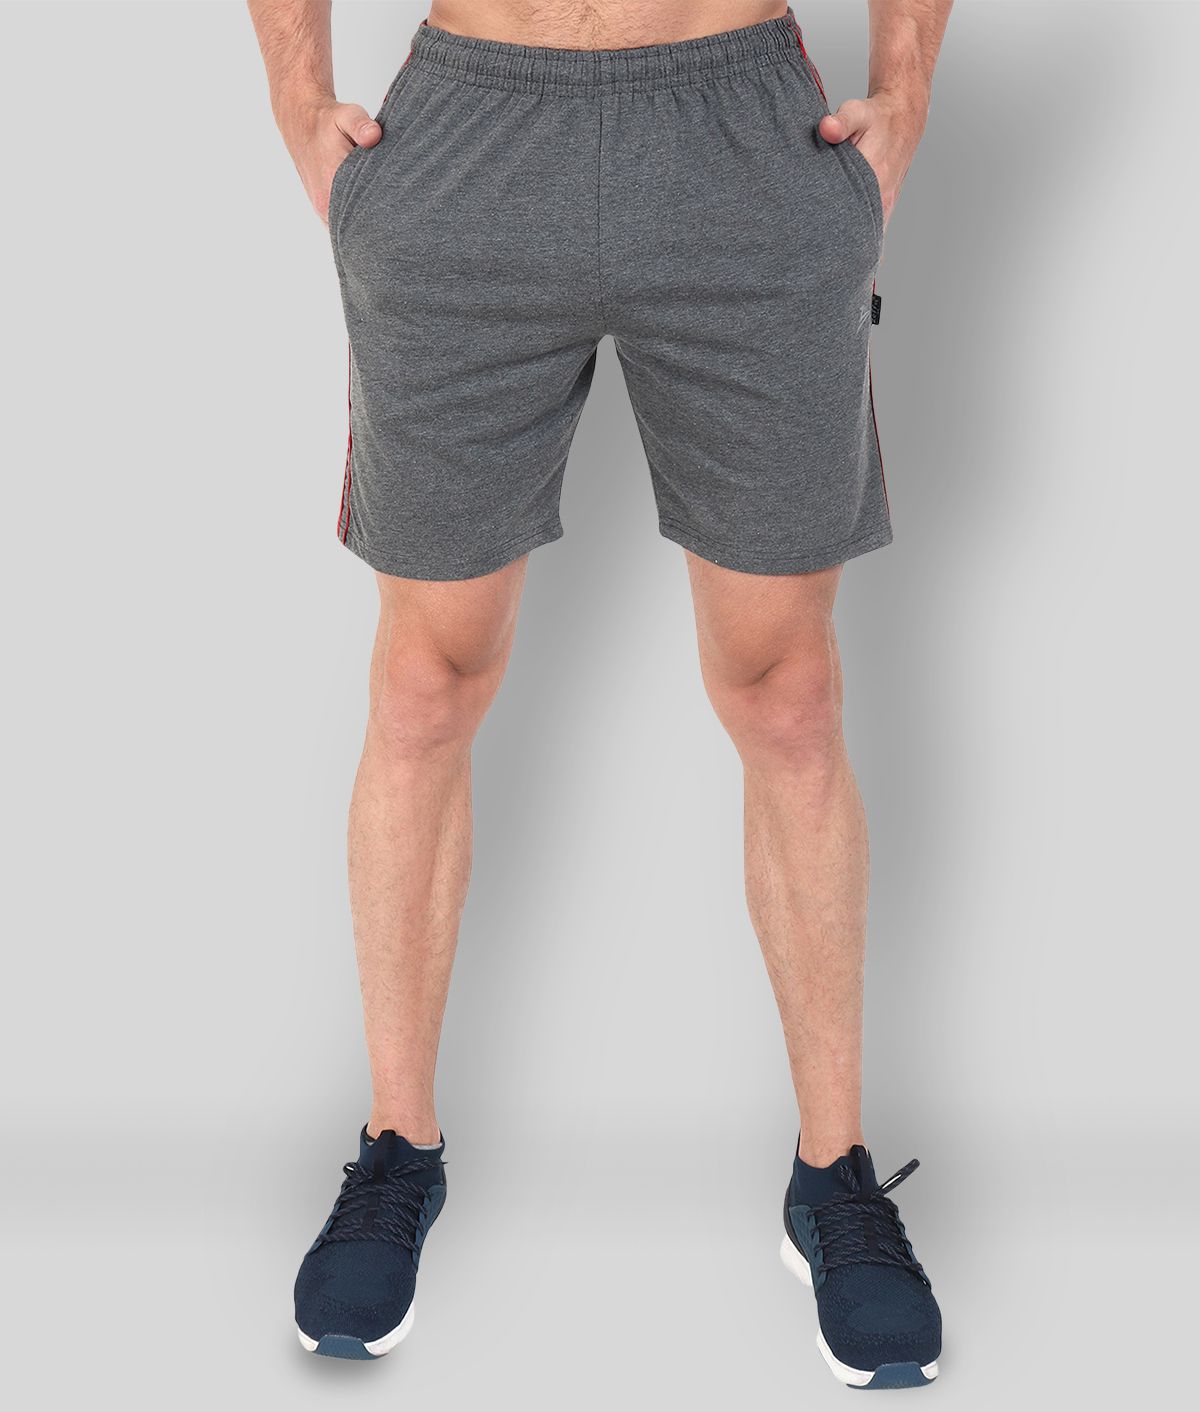     			Zeffit Multi Shorts Single